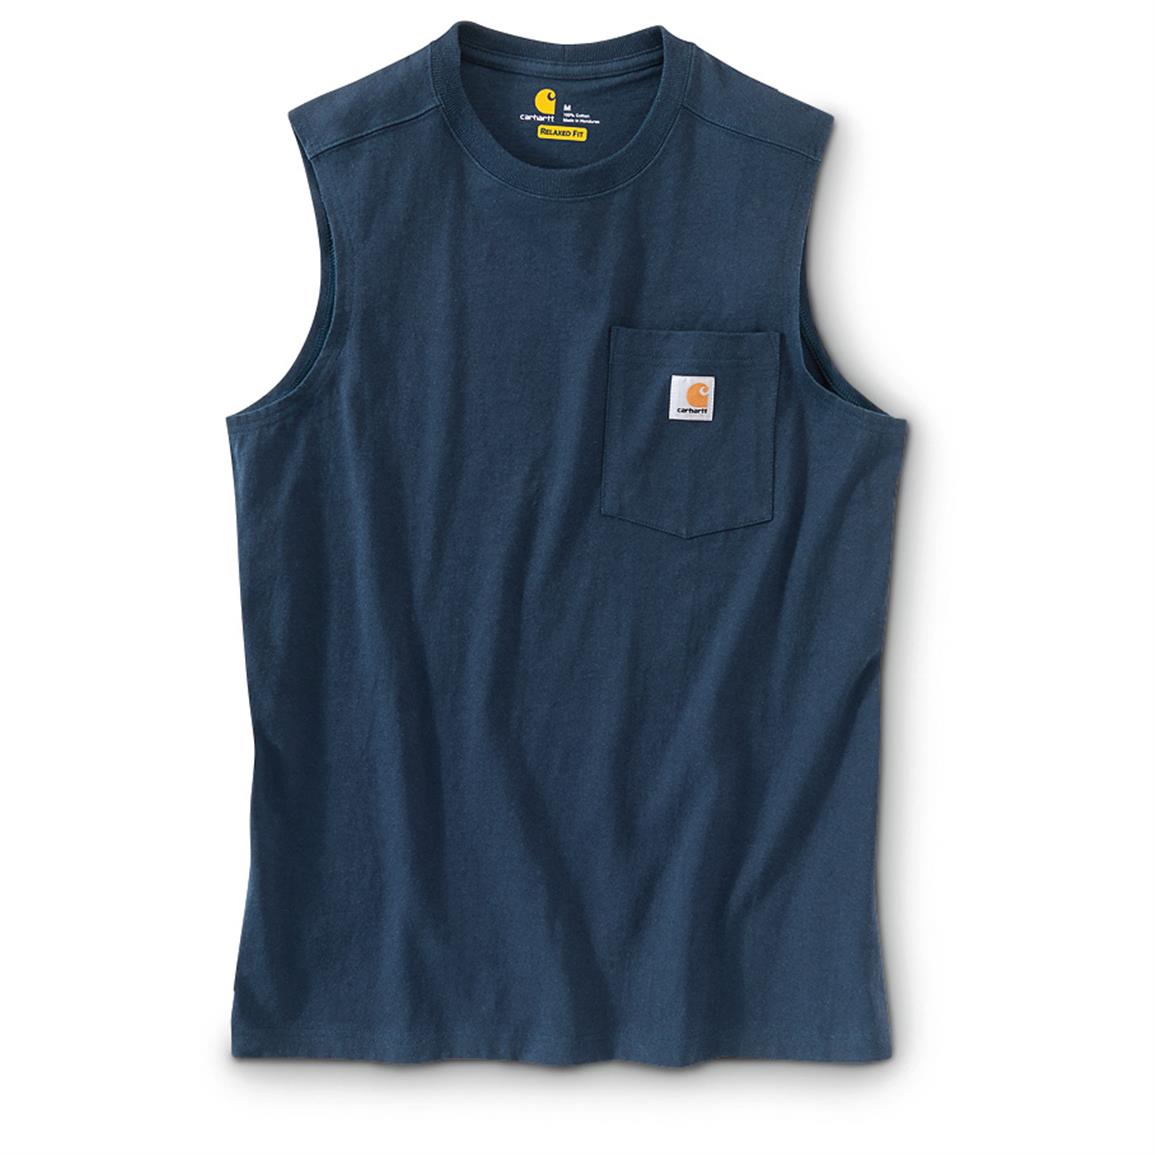 Carhartt Men's Workwear Pocket Sleeveless Shirt, Navy